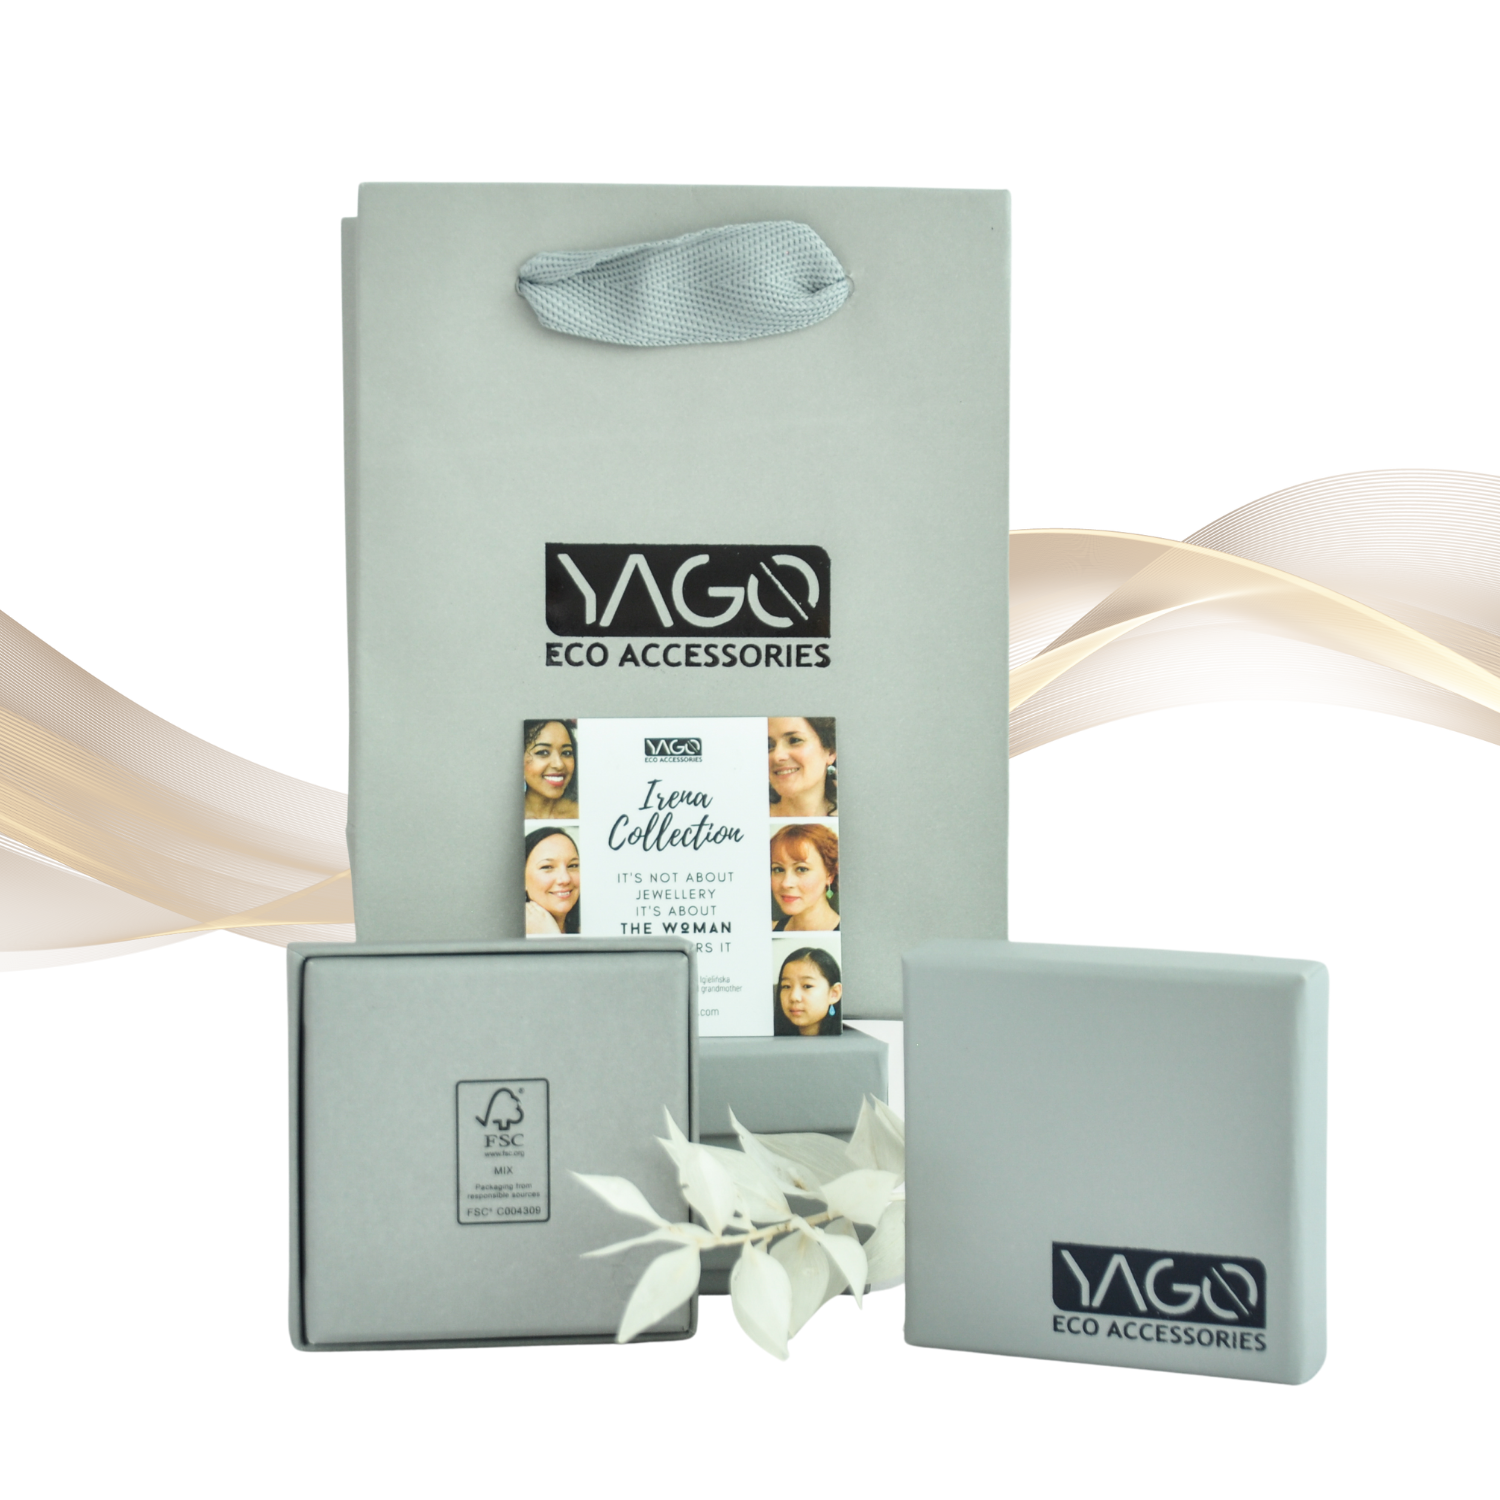 Sustainable Accessories Brand YagoEco